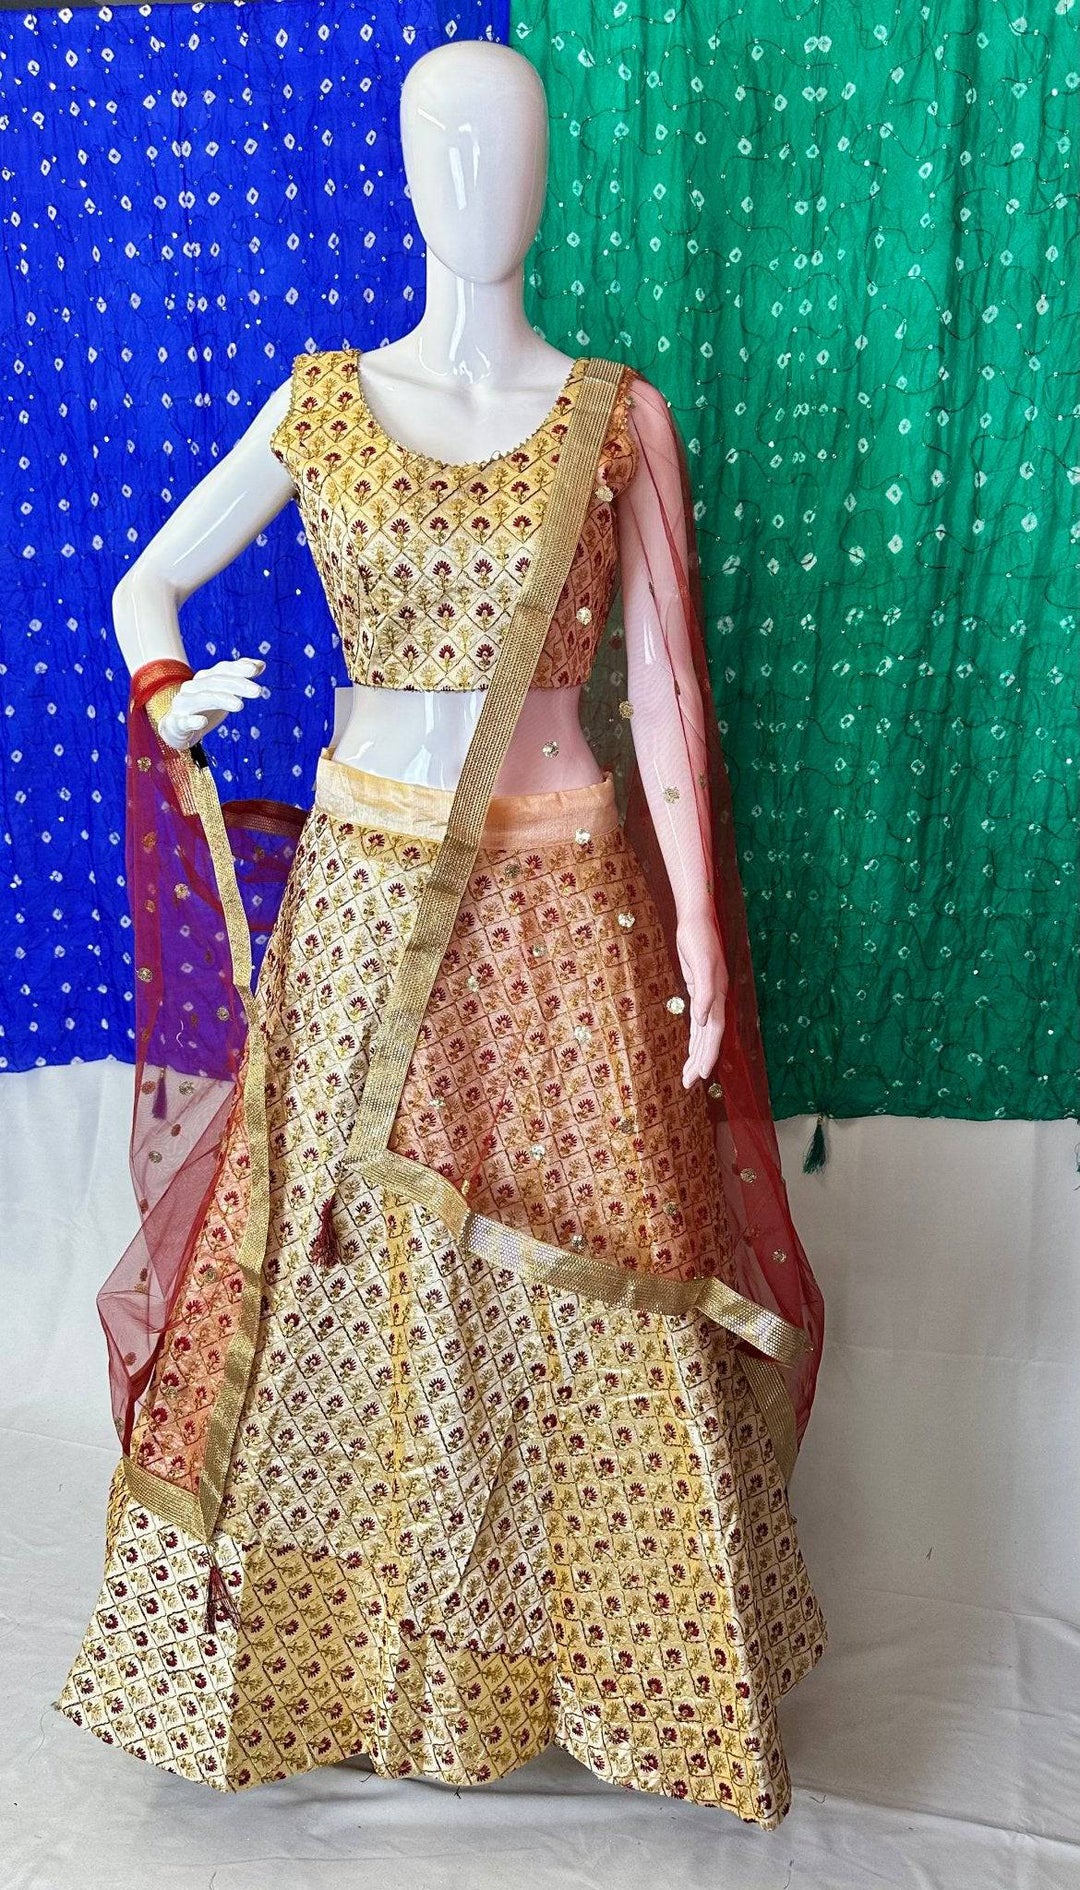 Regal Gold Lehenga Choli with Red Floral Accents - Adjustable Blouse & Free-Size Skirt with Elegant Net Dupatta - Shree Shringar